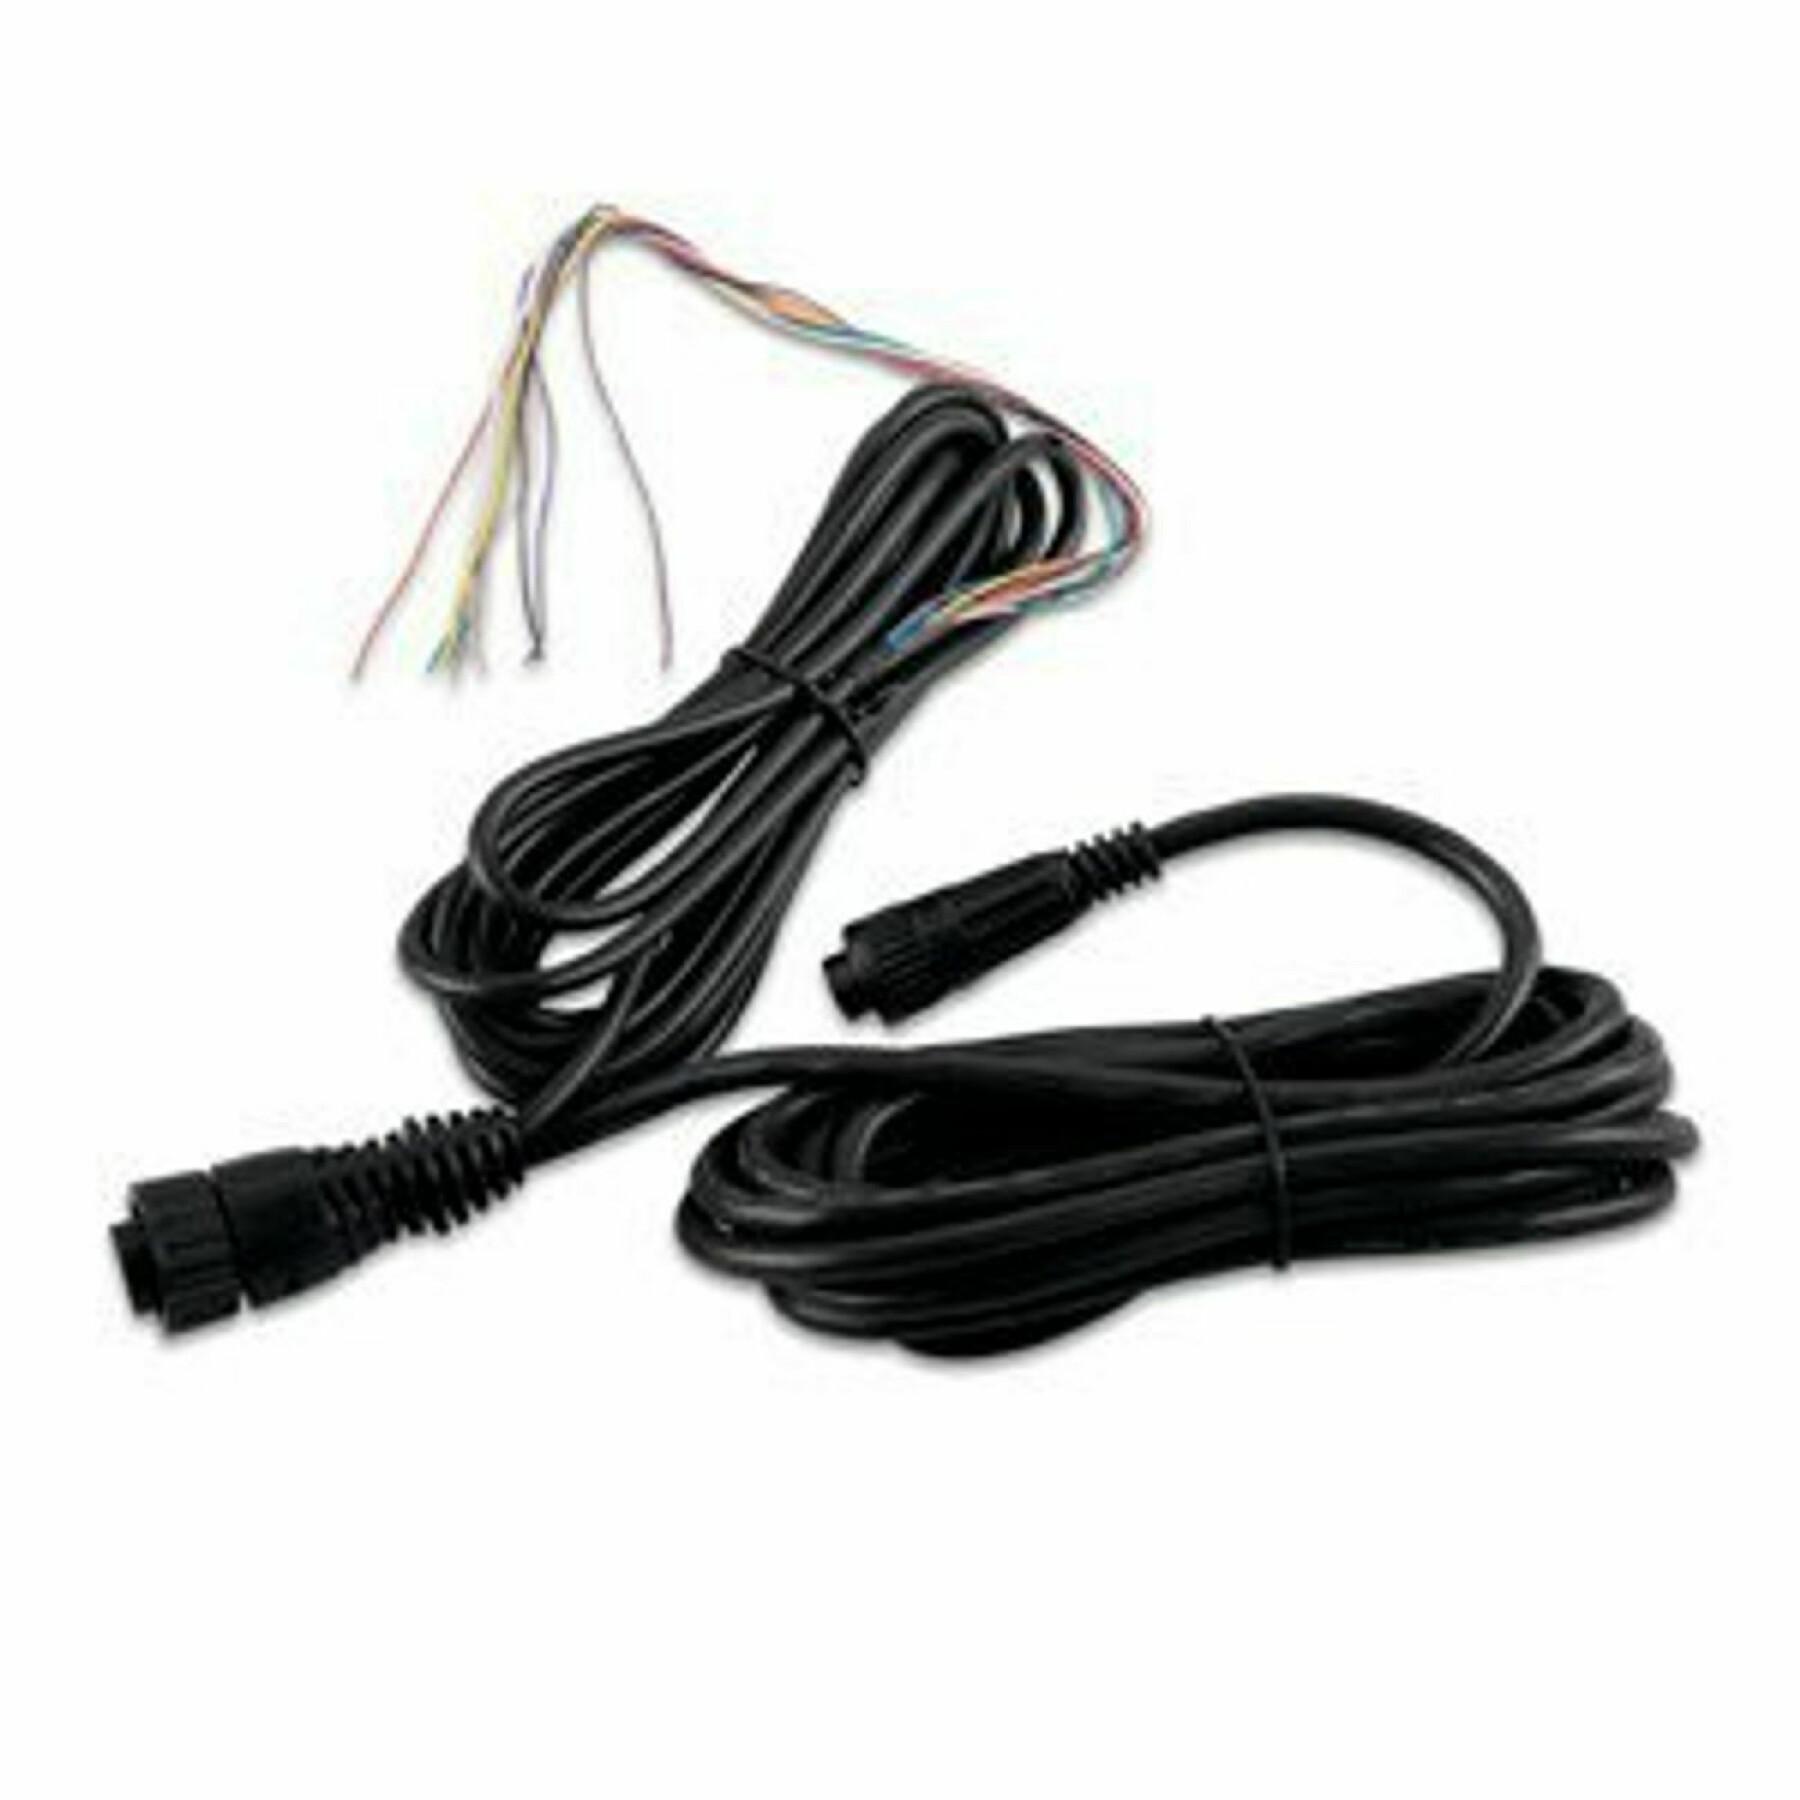 Kabel Garmin ccu/ecu interconnect cable 20m